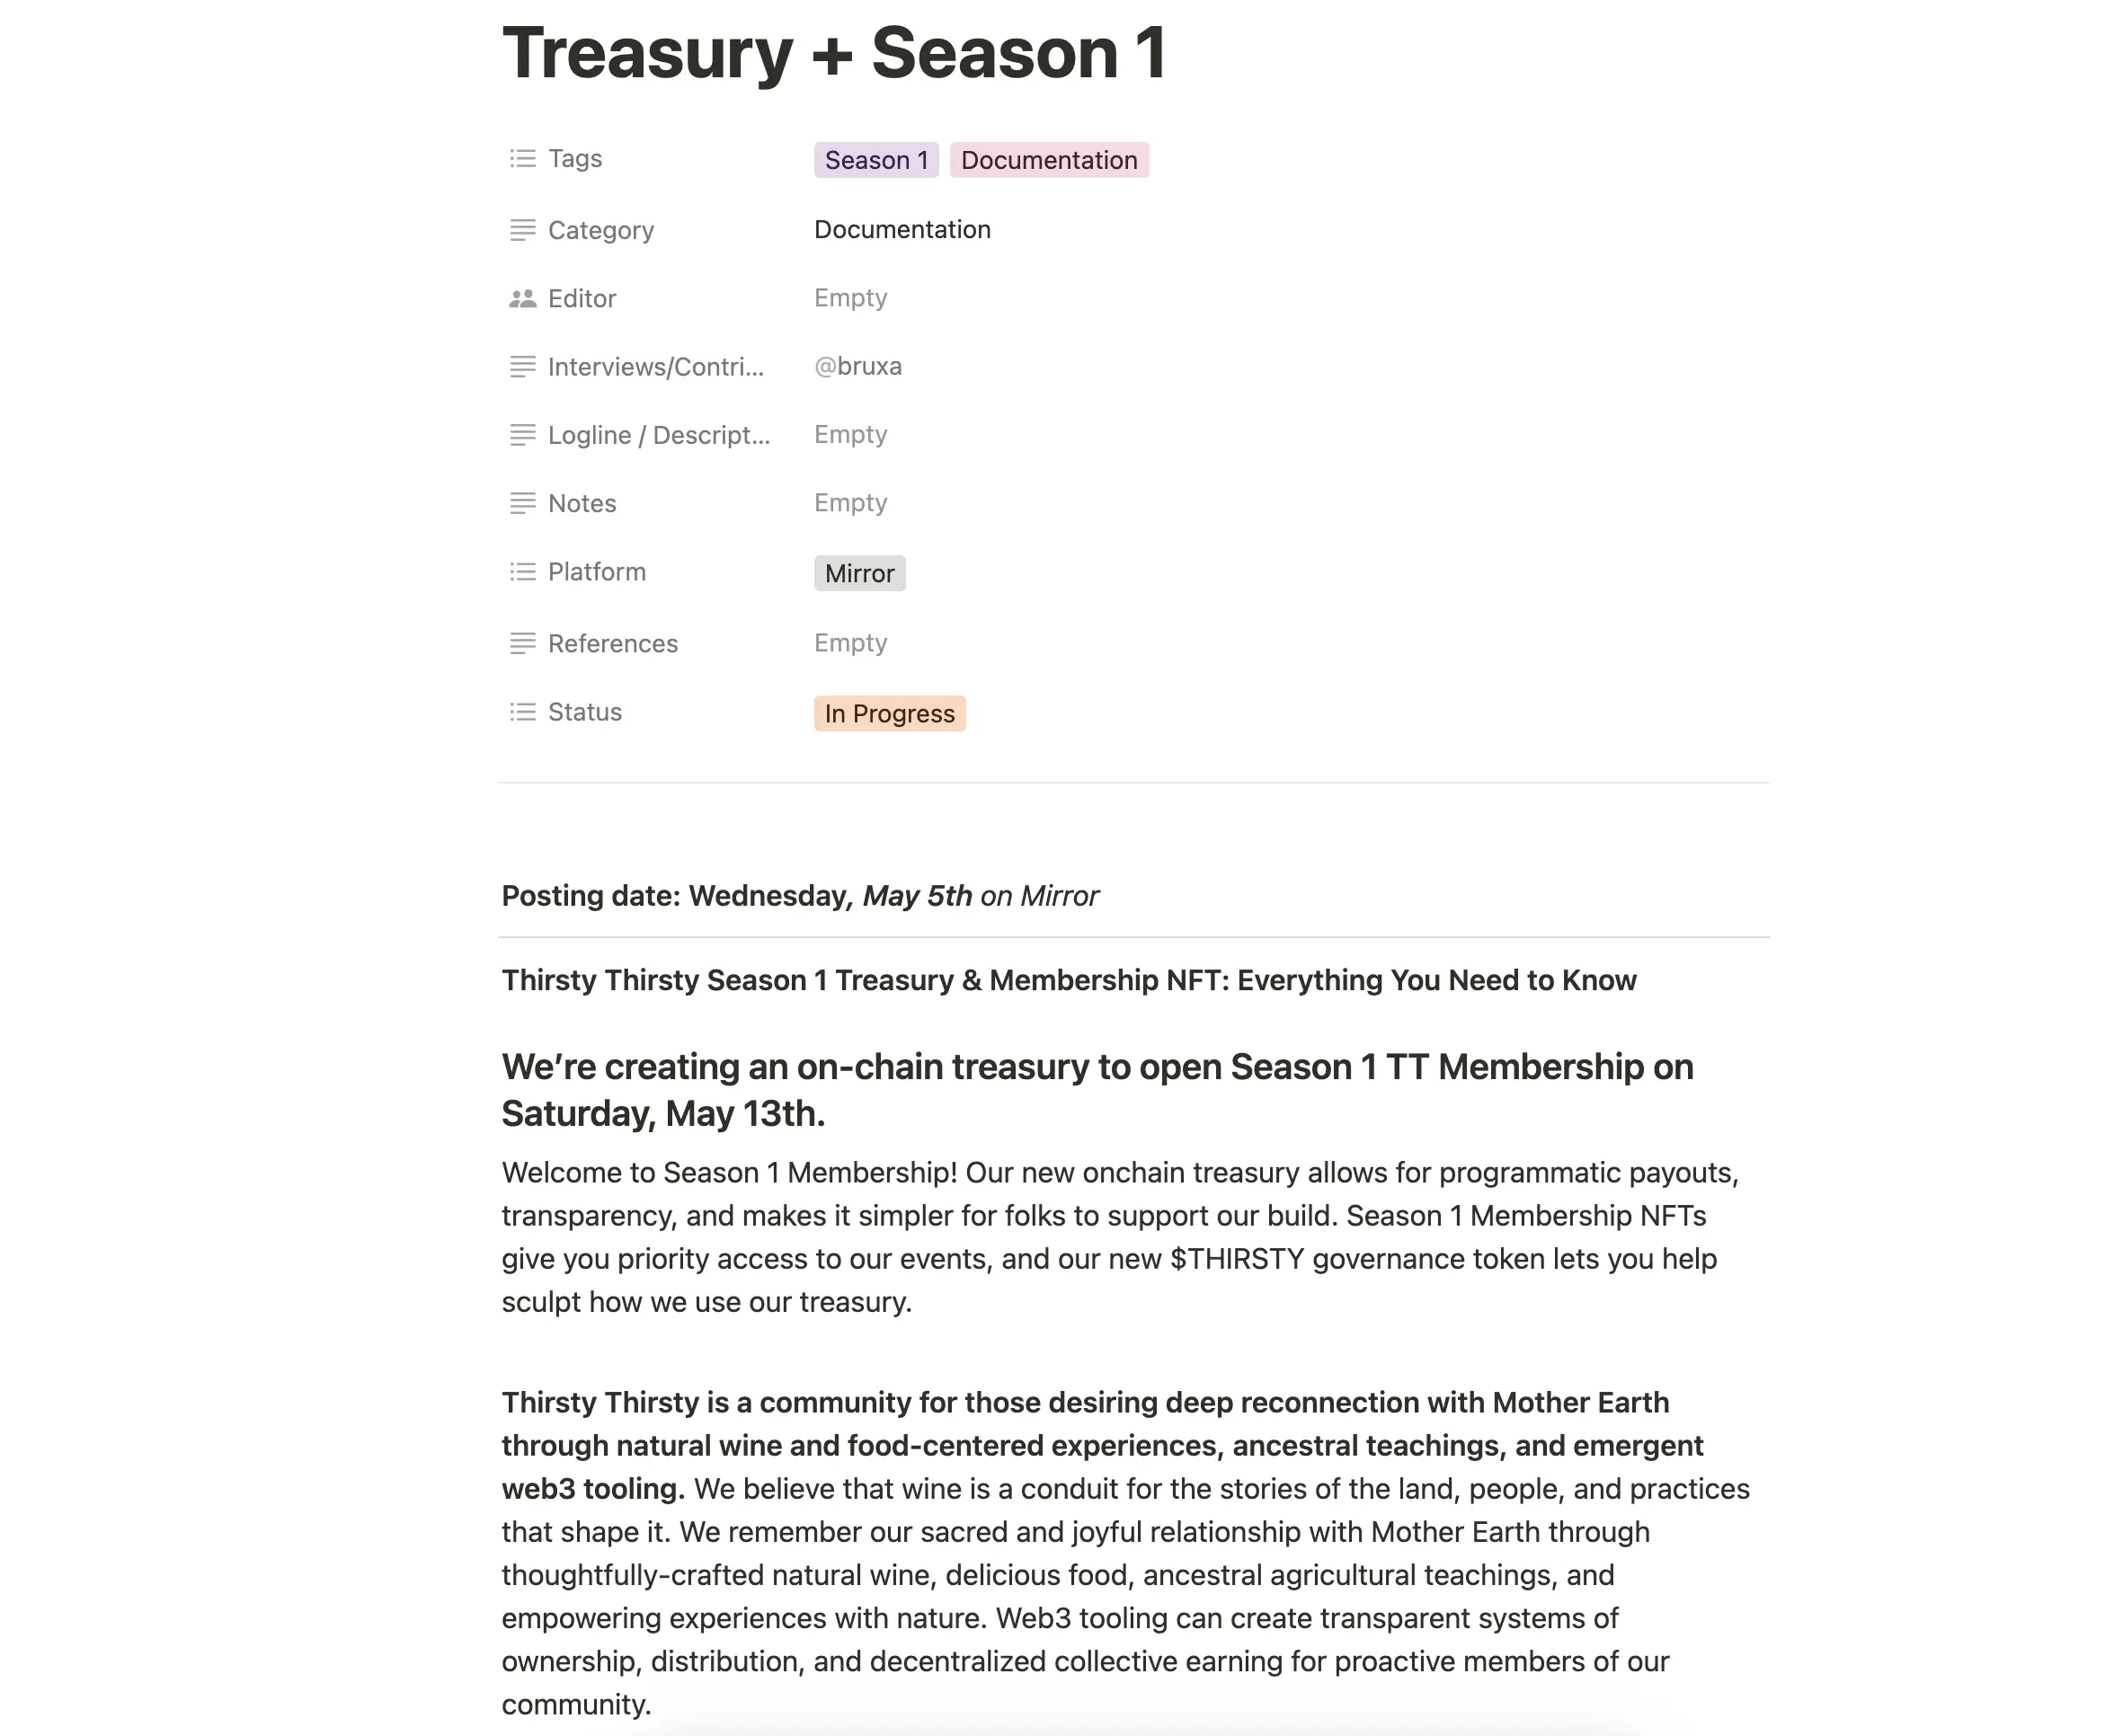 Thirsty Thirsty Season 1 treasury and NFT